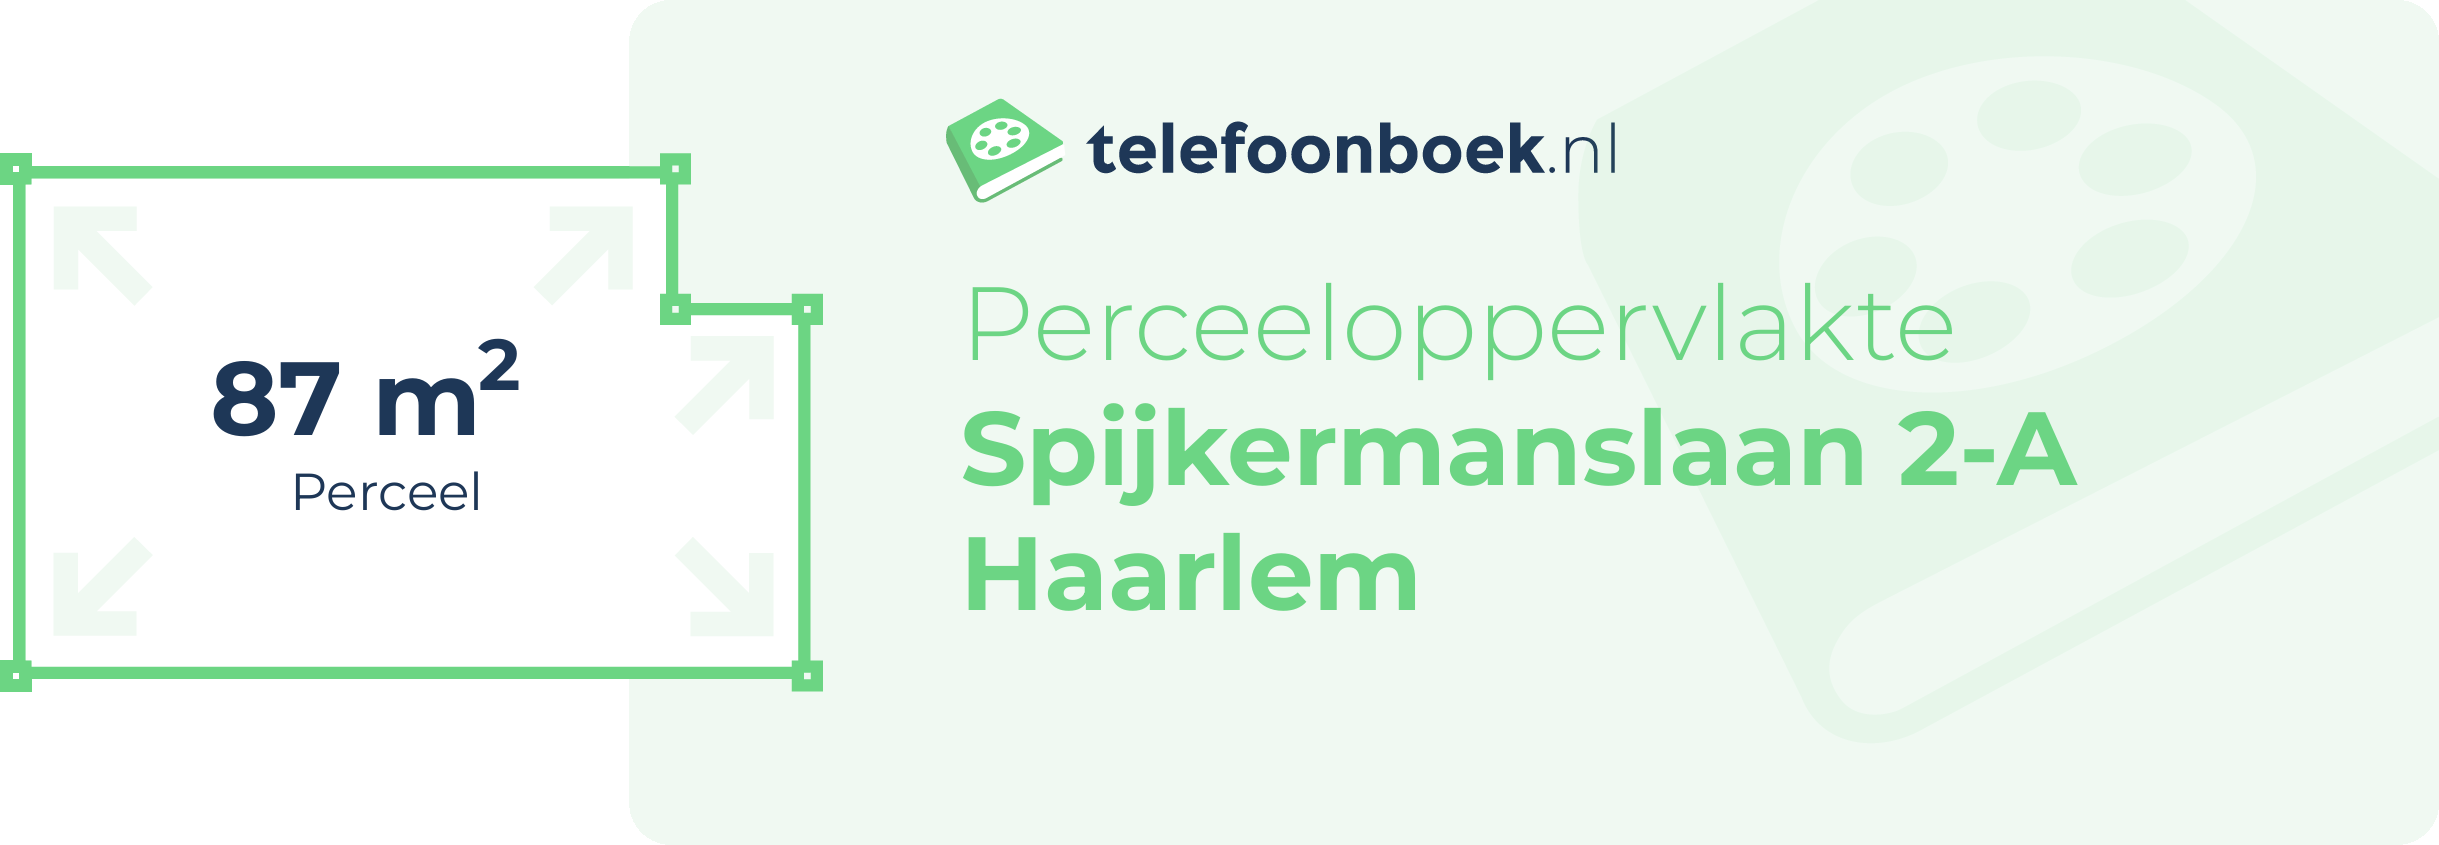 Perceeloppervlakte Spijkermanslaan 2-A Haarlem